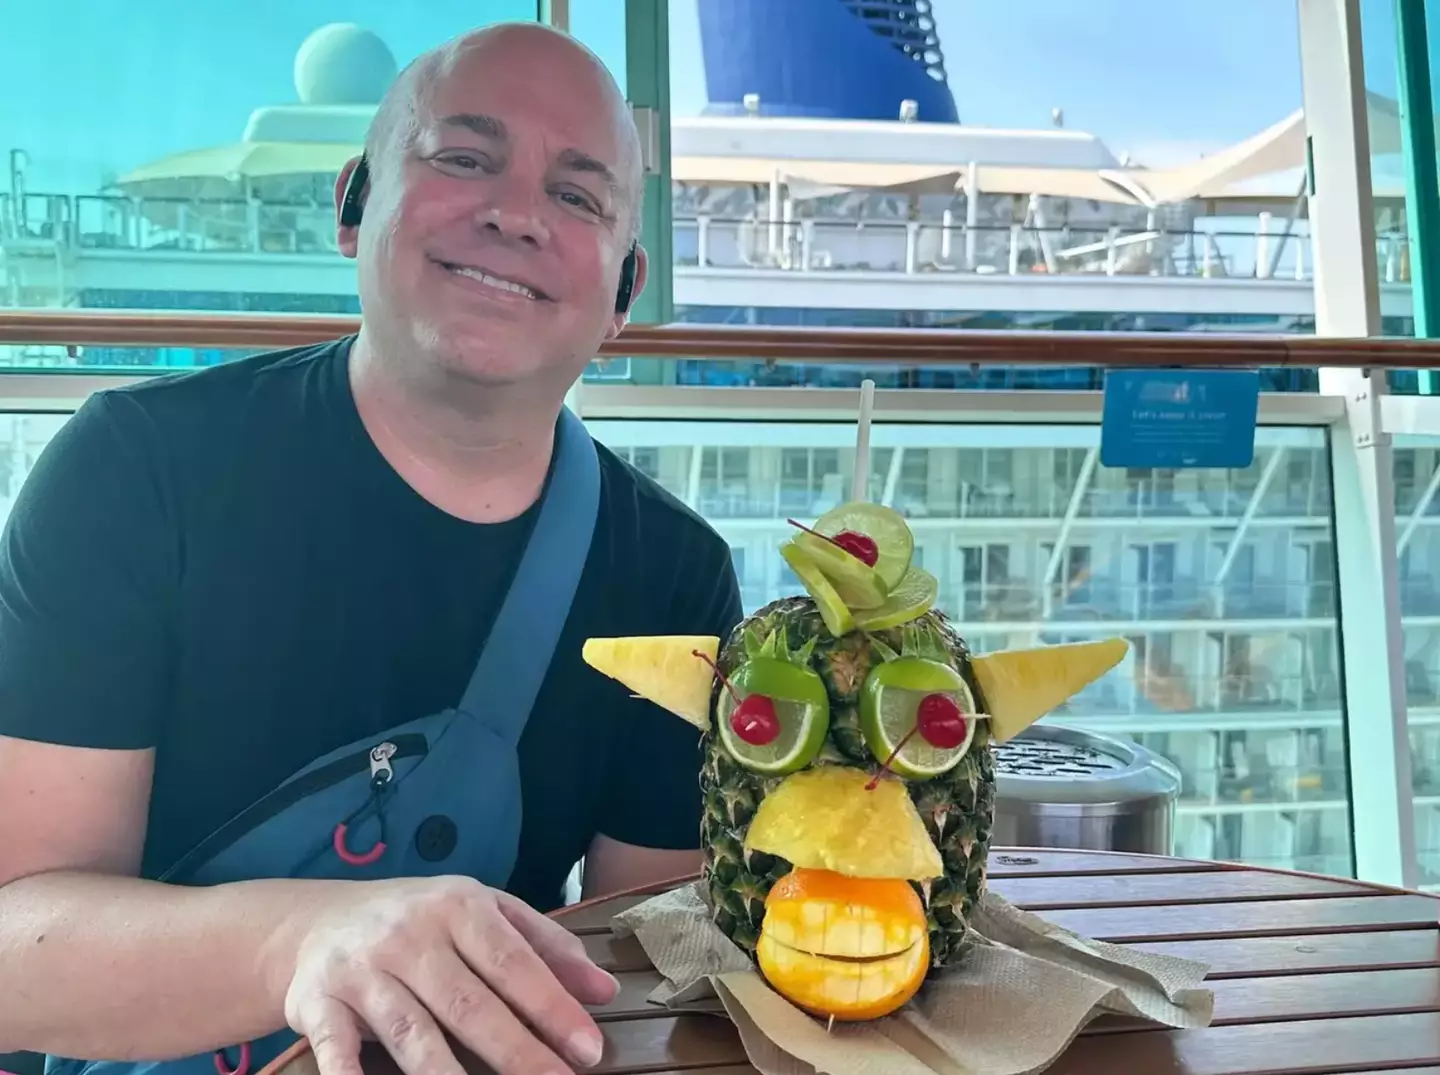 Ryan loving life on a cruise ship.